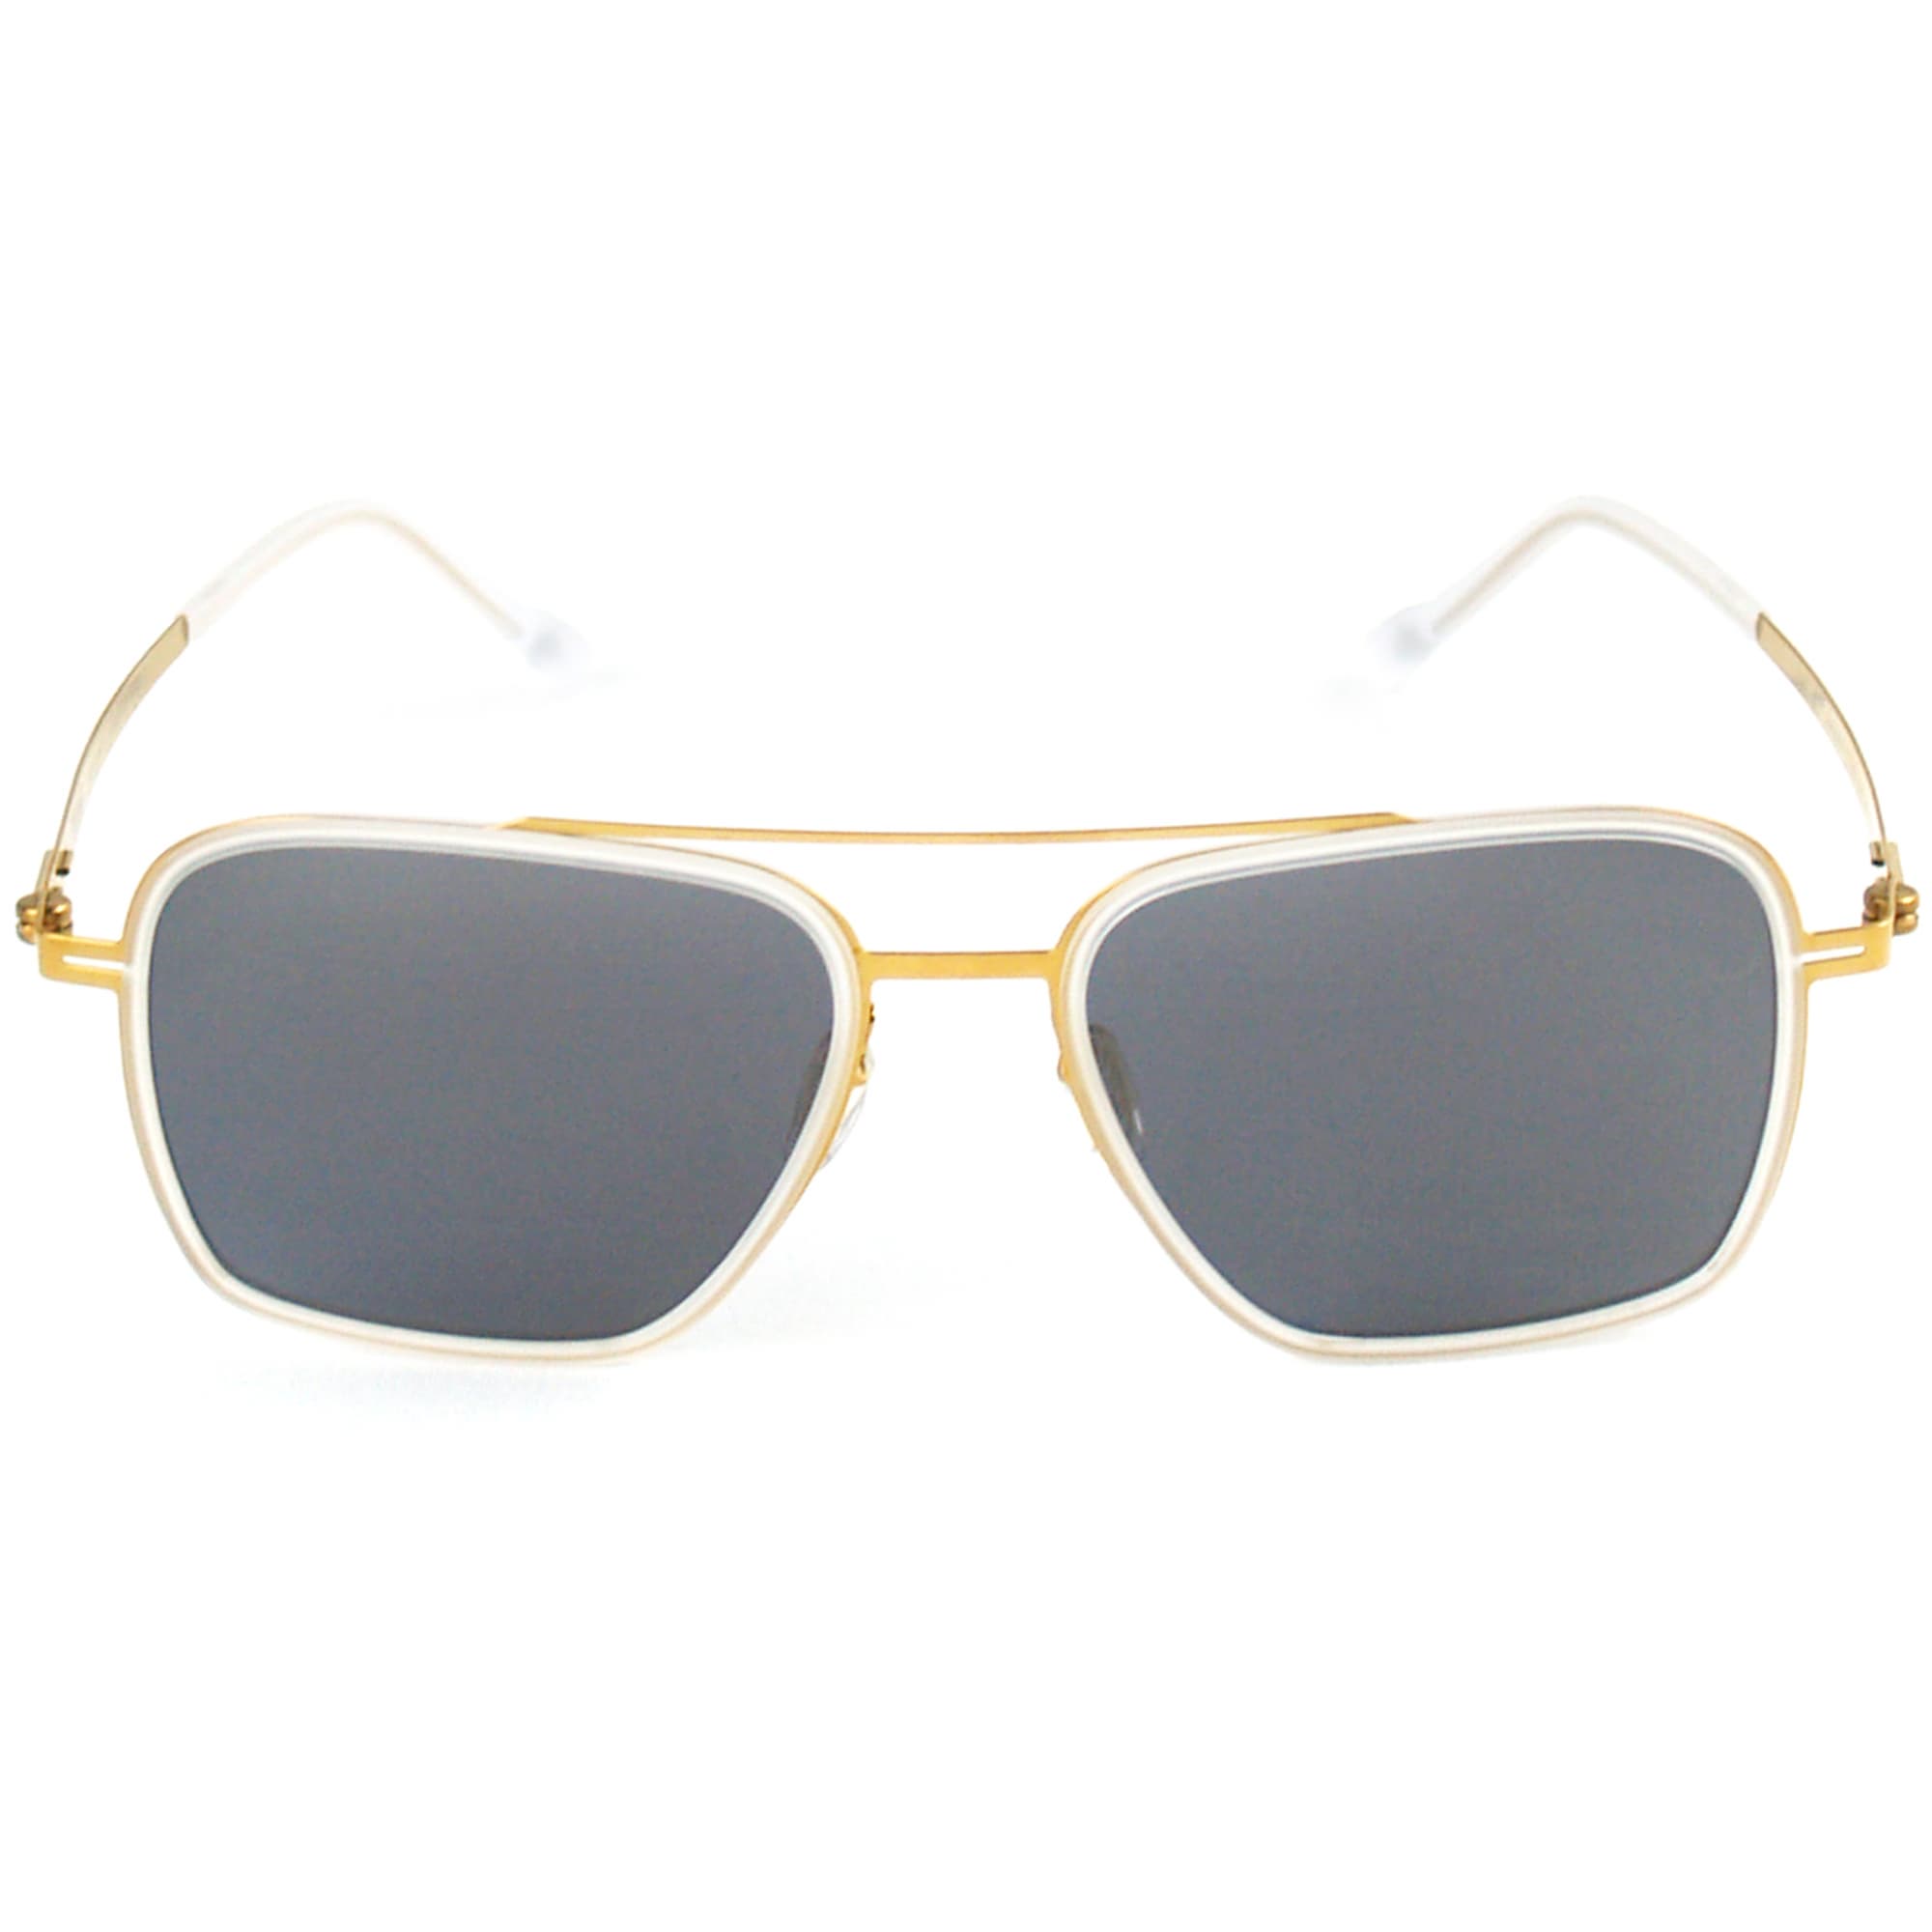 AviatorII  Acetate _ Thin Stainless Steel  Frame Sunglasses